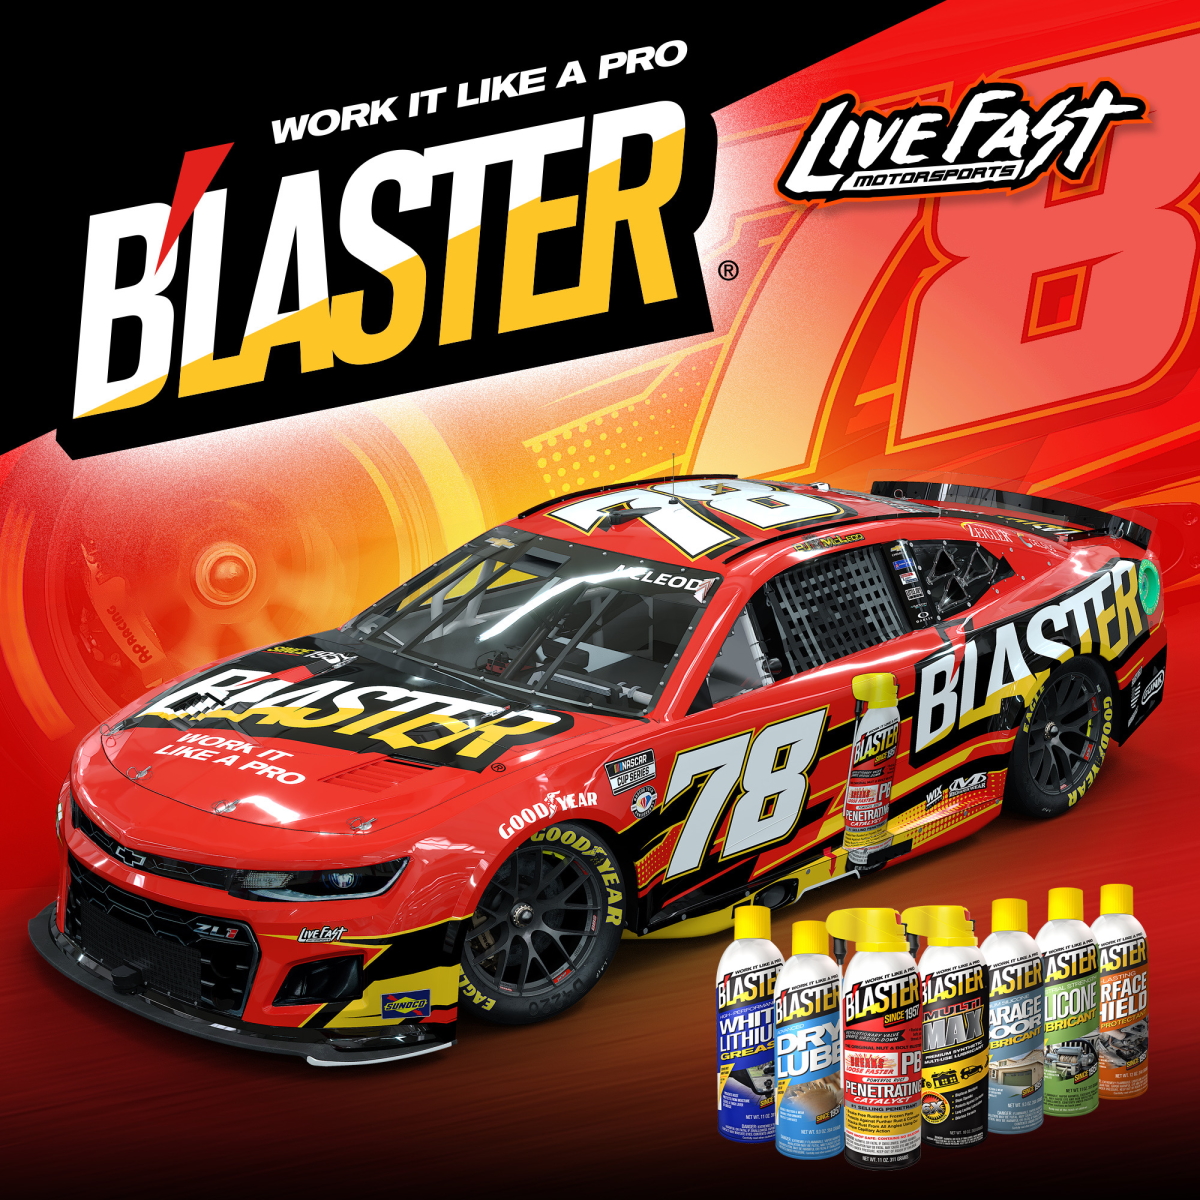 BJ McLeod Live Fast Motorsports B'laster Blaster sponsorship 2023 NASCAR Cup Series